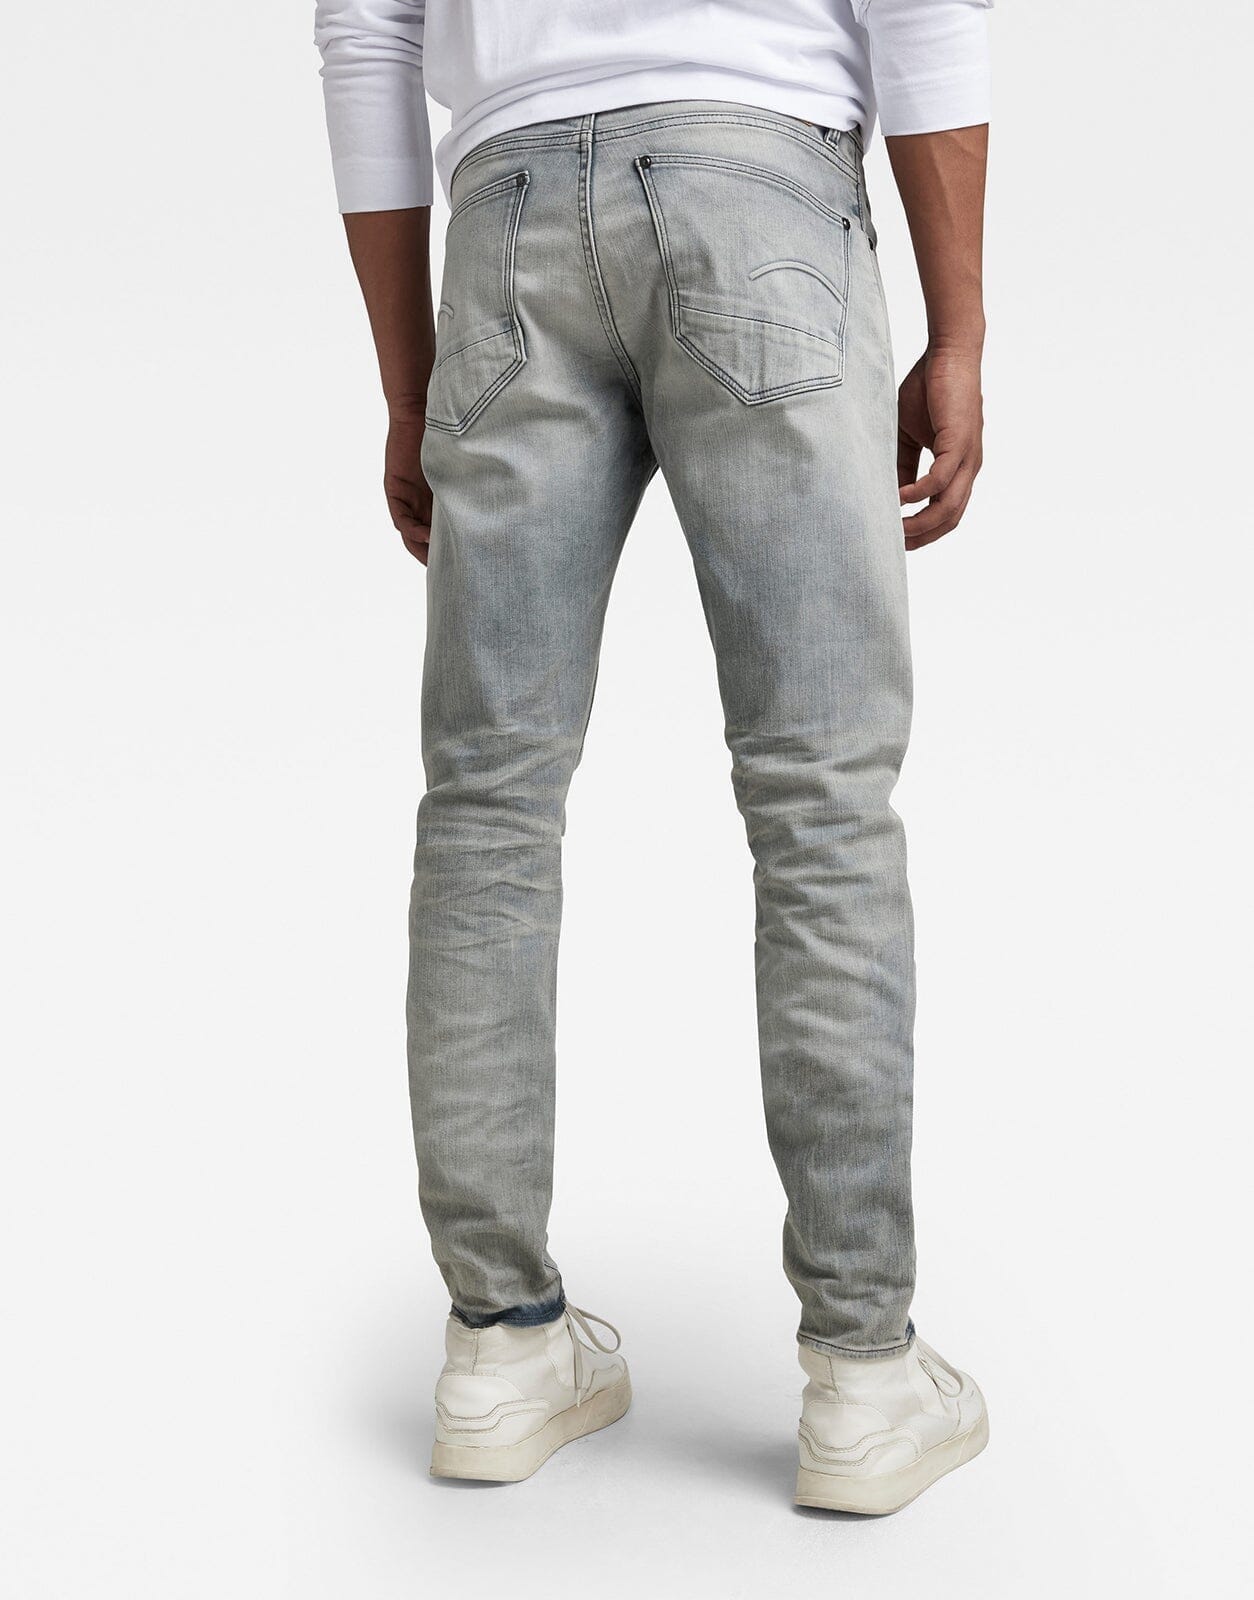 G-Star RAW Revend Fwd Light Grey Jeans - Subwear